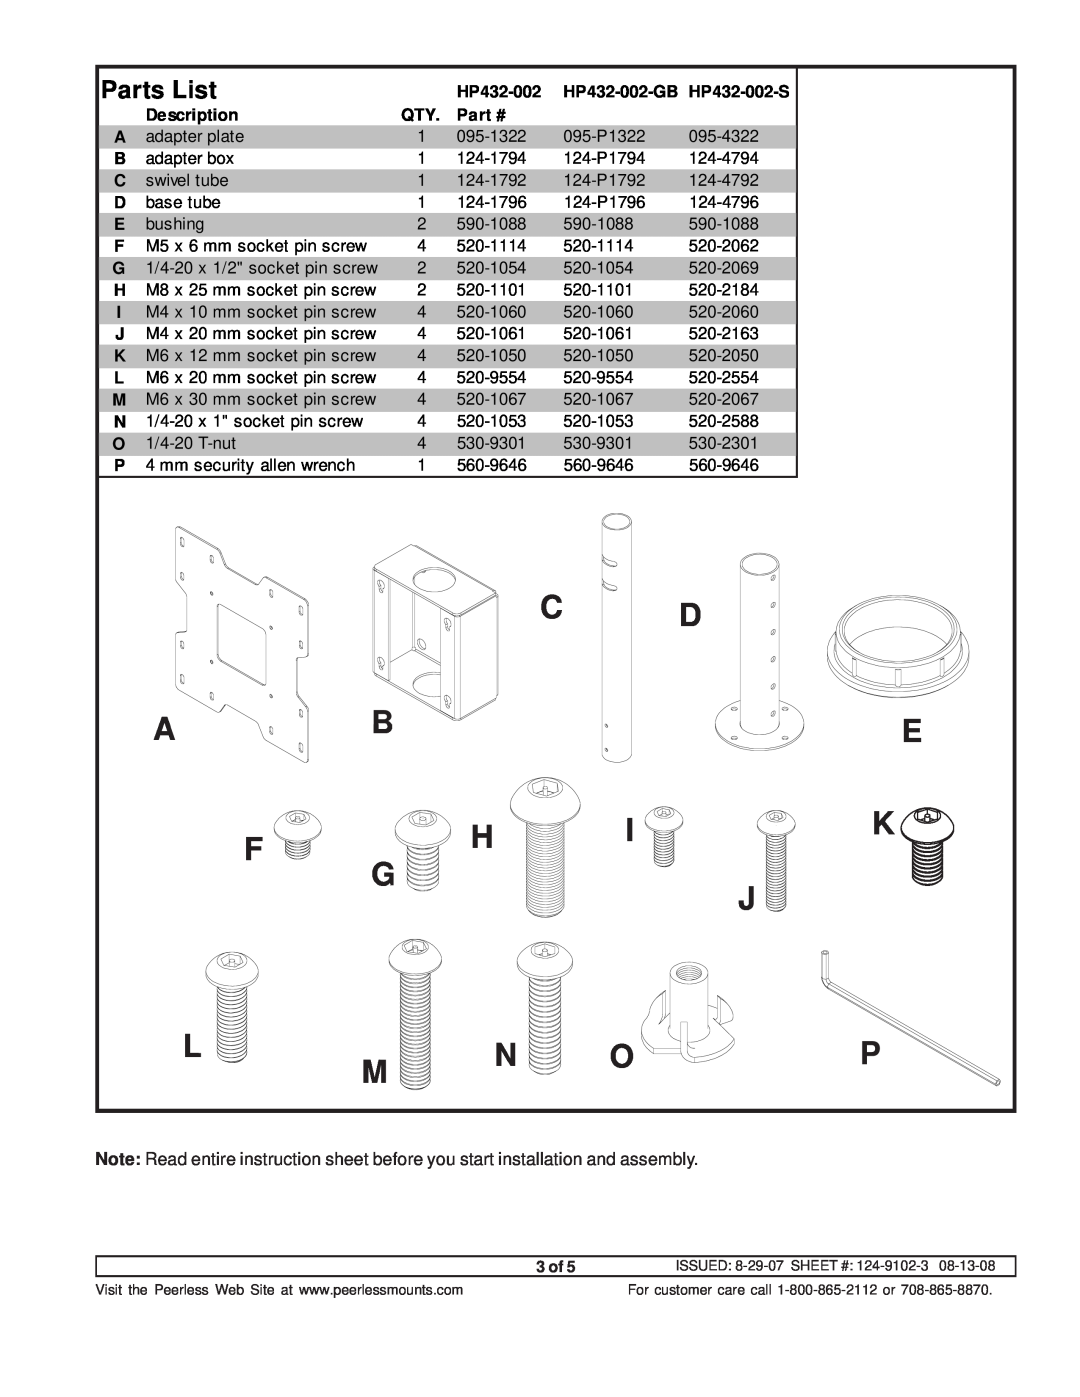 Peerless Industries manual C D Ab F H I G J, L N O P M, Parts List, HP432-002-GB HP432-002-S, Description 